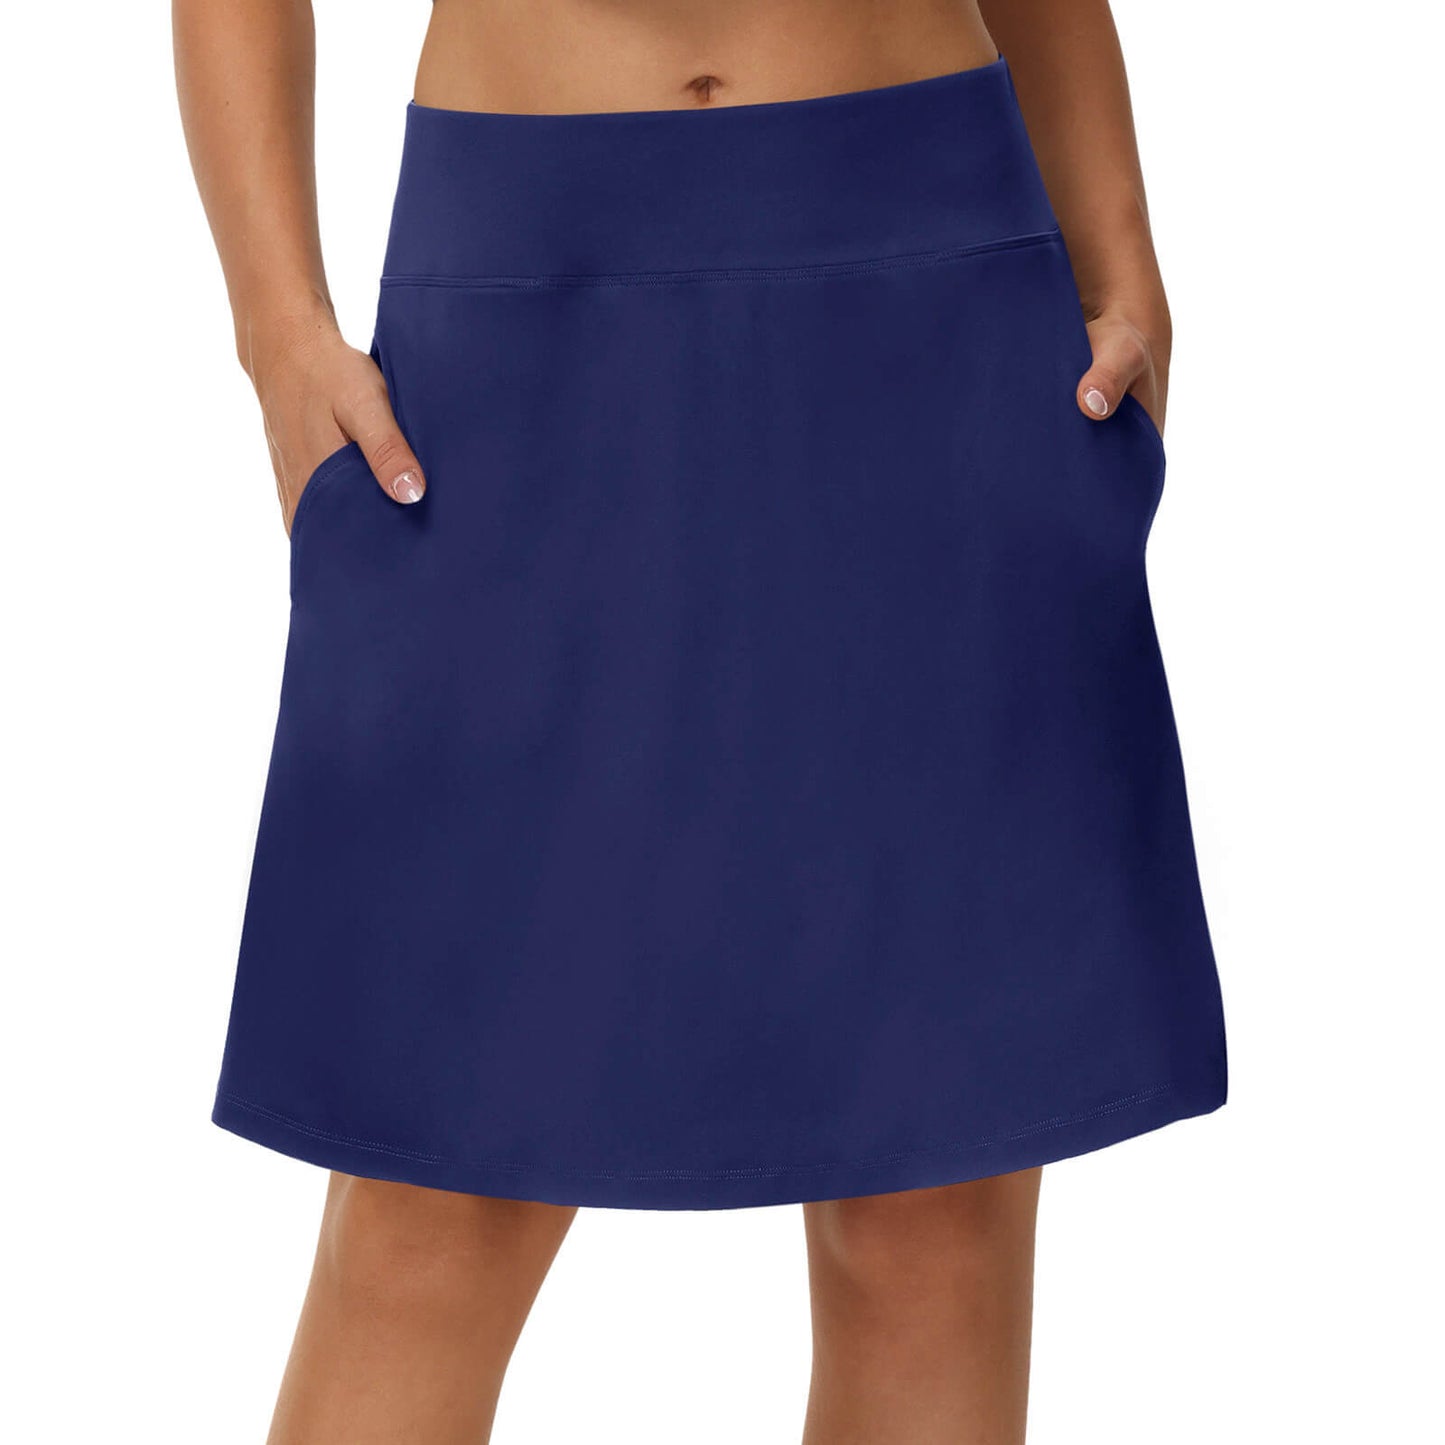 Dark Blue Knee Length Tennis Skirts with Pockets